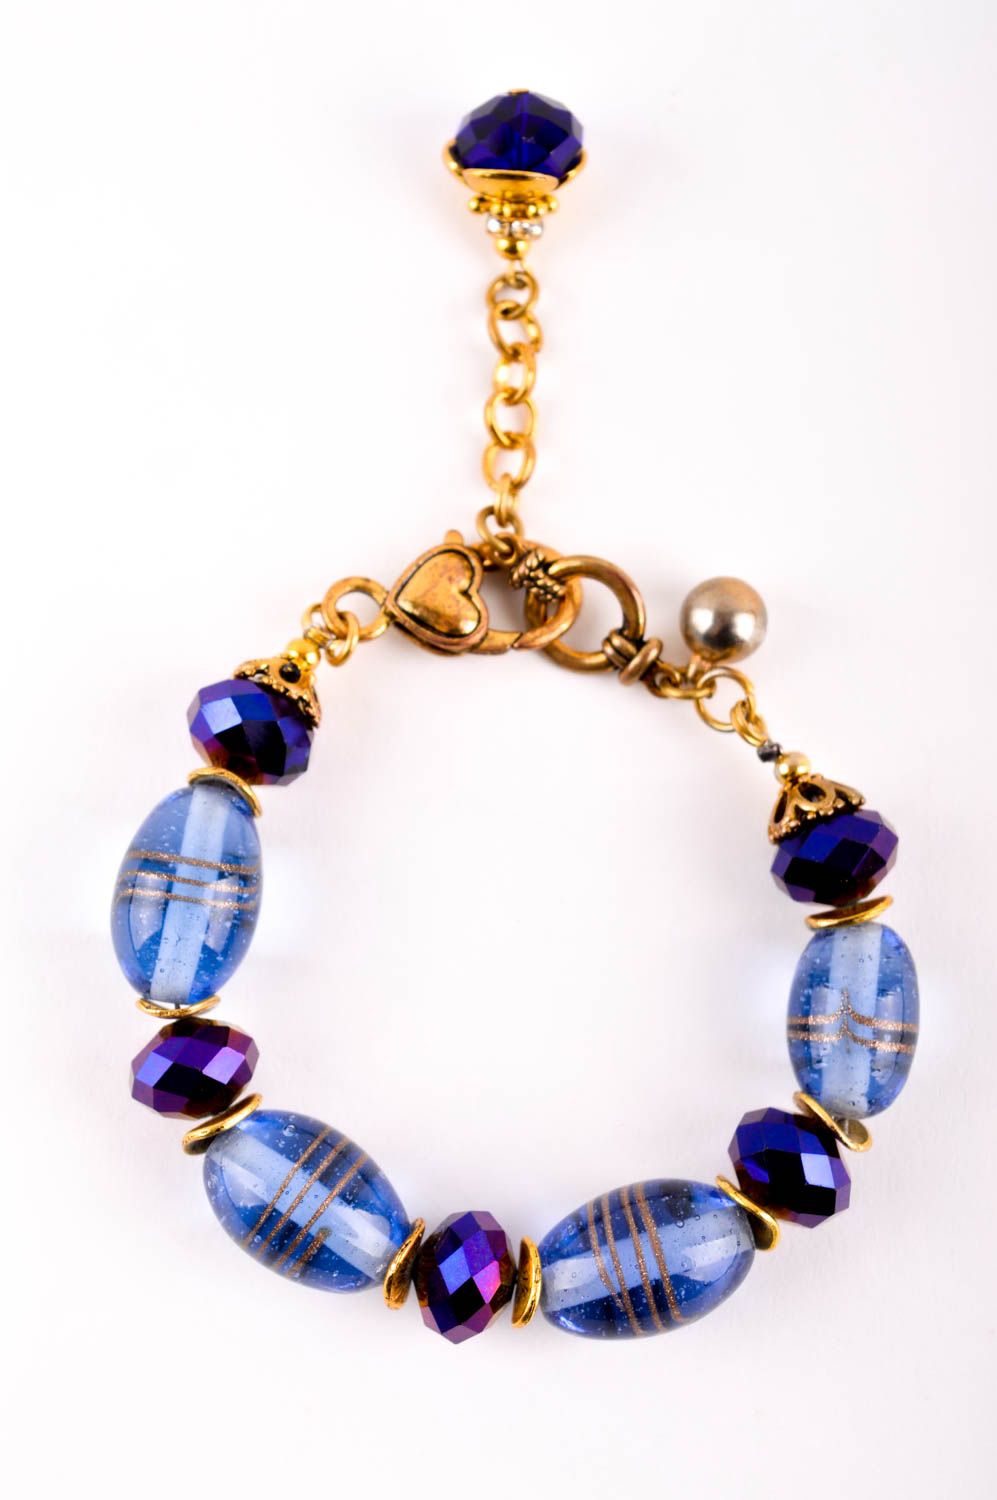 Handmade bracelet with natural stones jewelry stones designer fashion jewelry photo 2